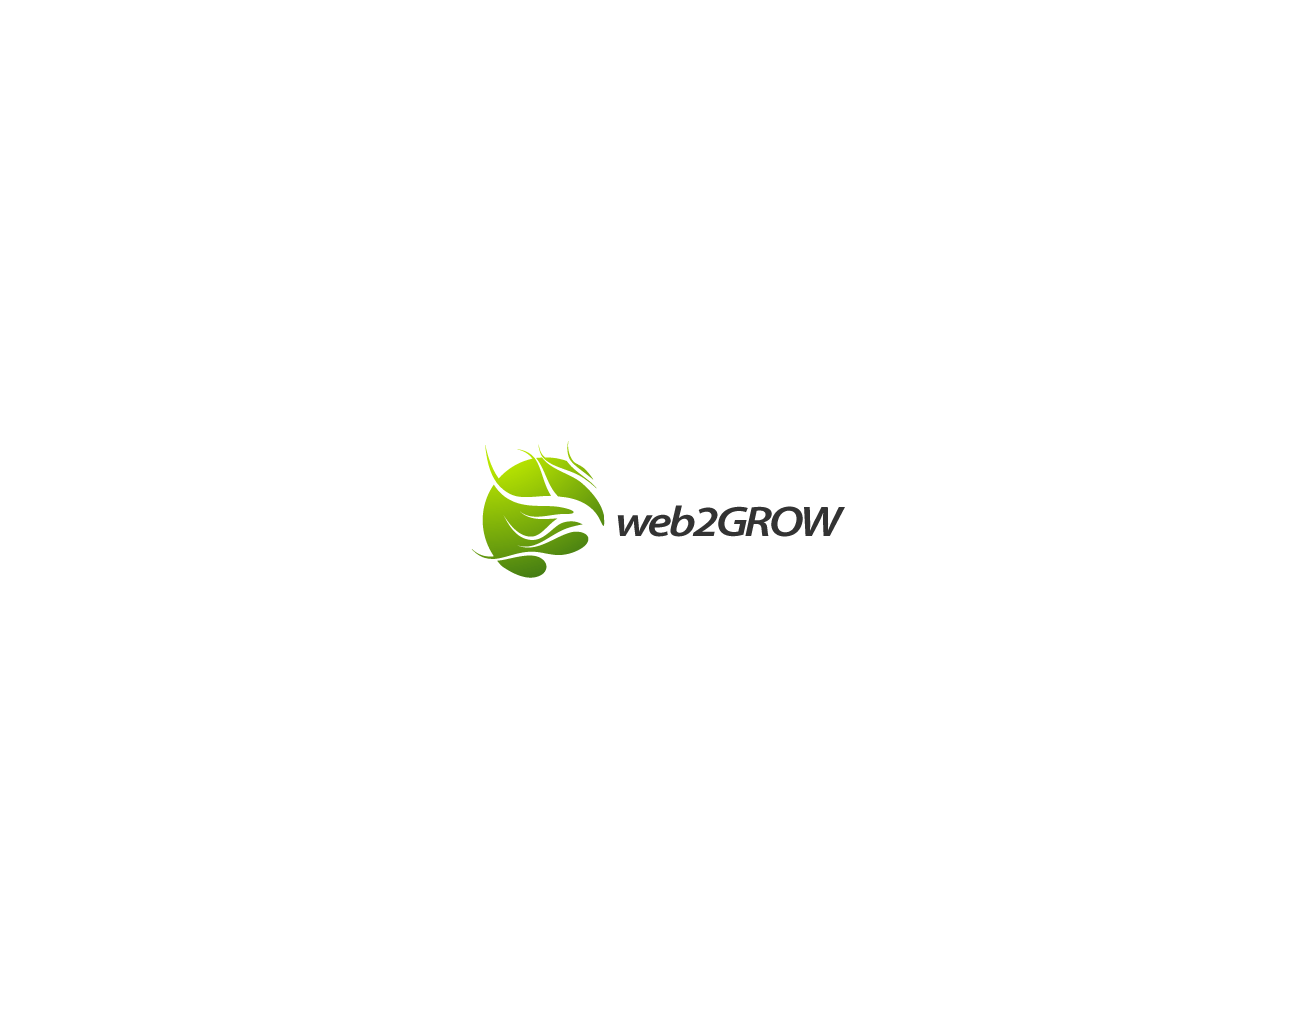 Jackie Logo - Bold, Modern, Small Business Logo Design for web2grow by Jackie ...